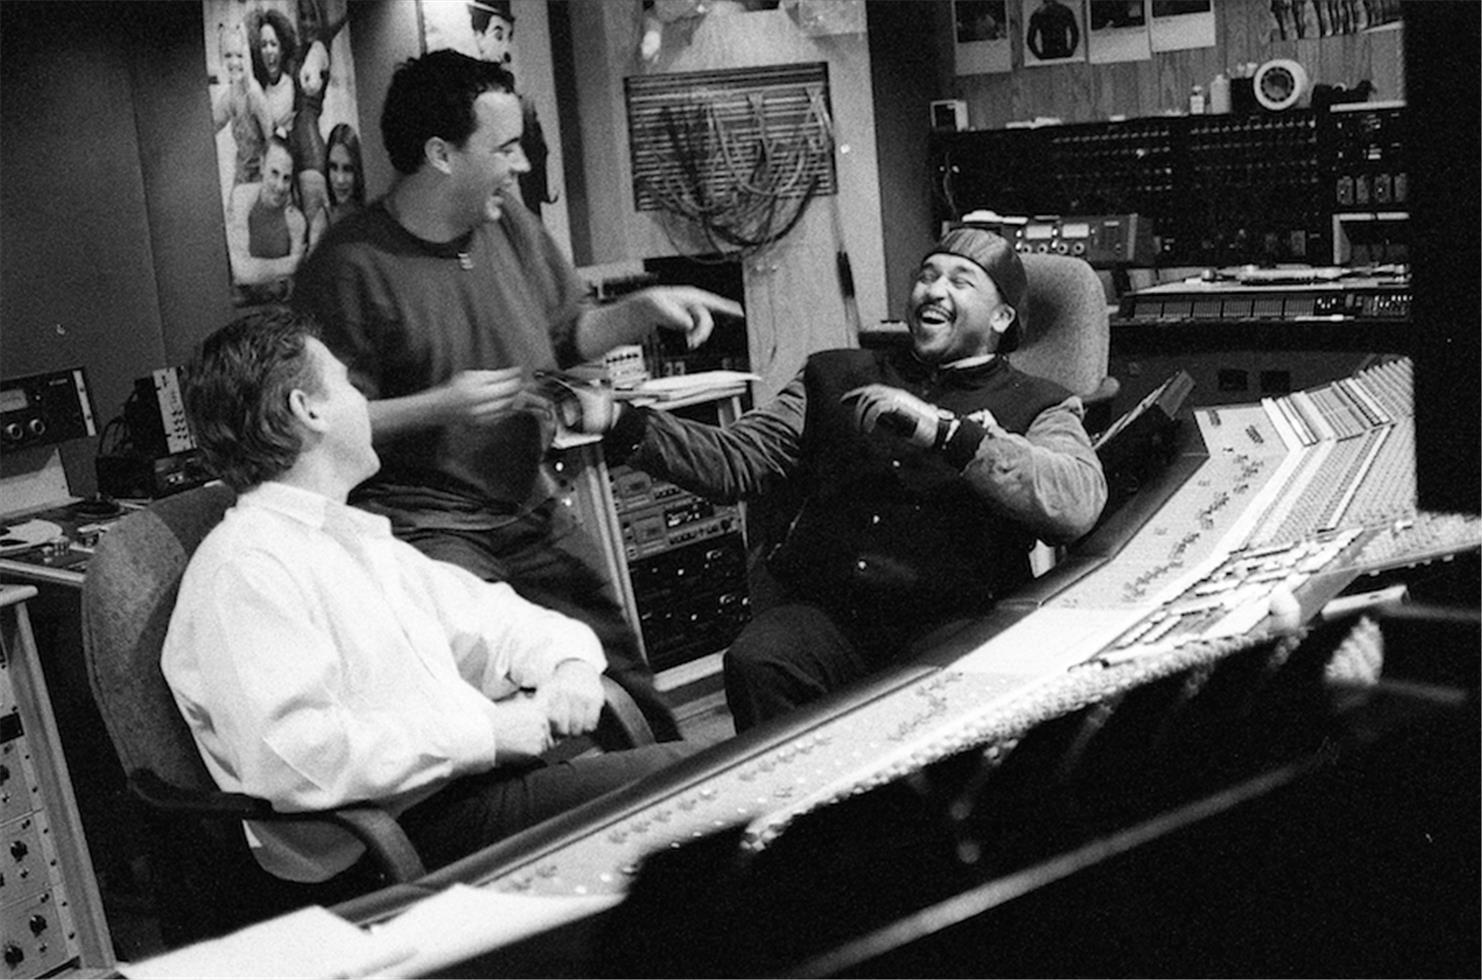 Sam Erickson Black and White Photograph - Dave Matthews Band, Electric Lady Studio, NYC, 1998